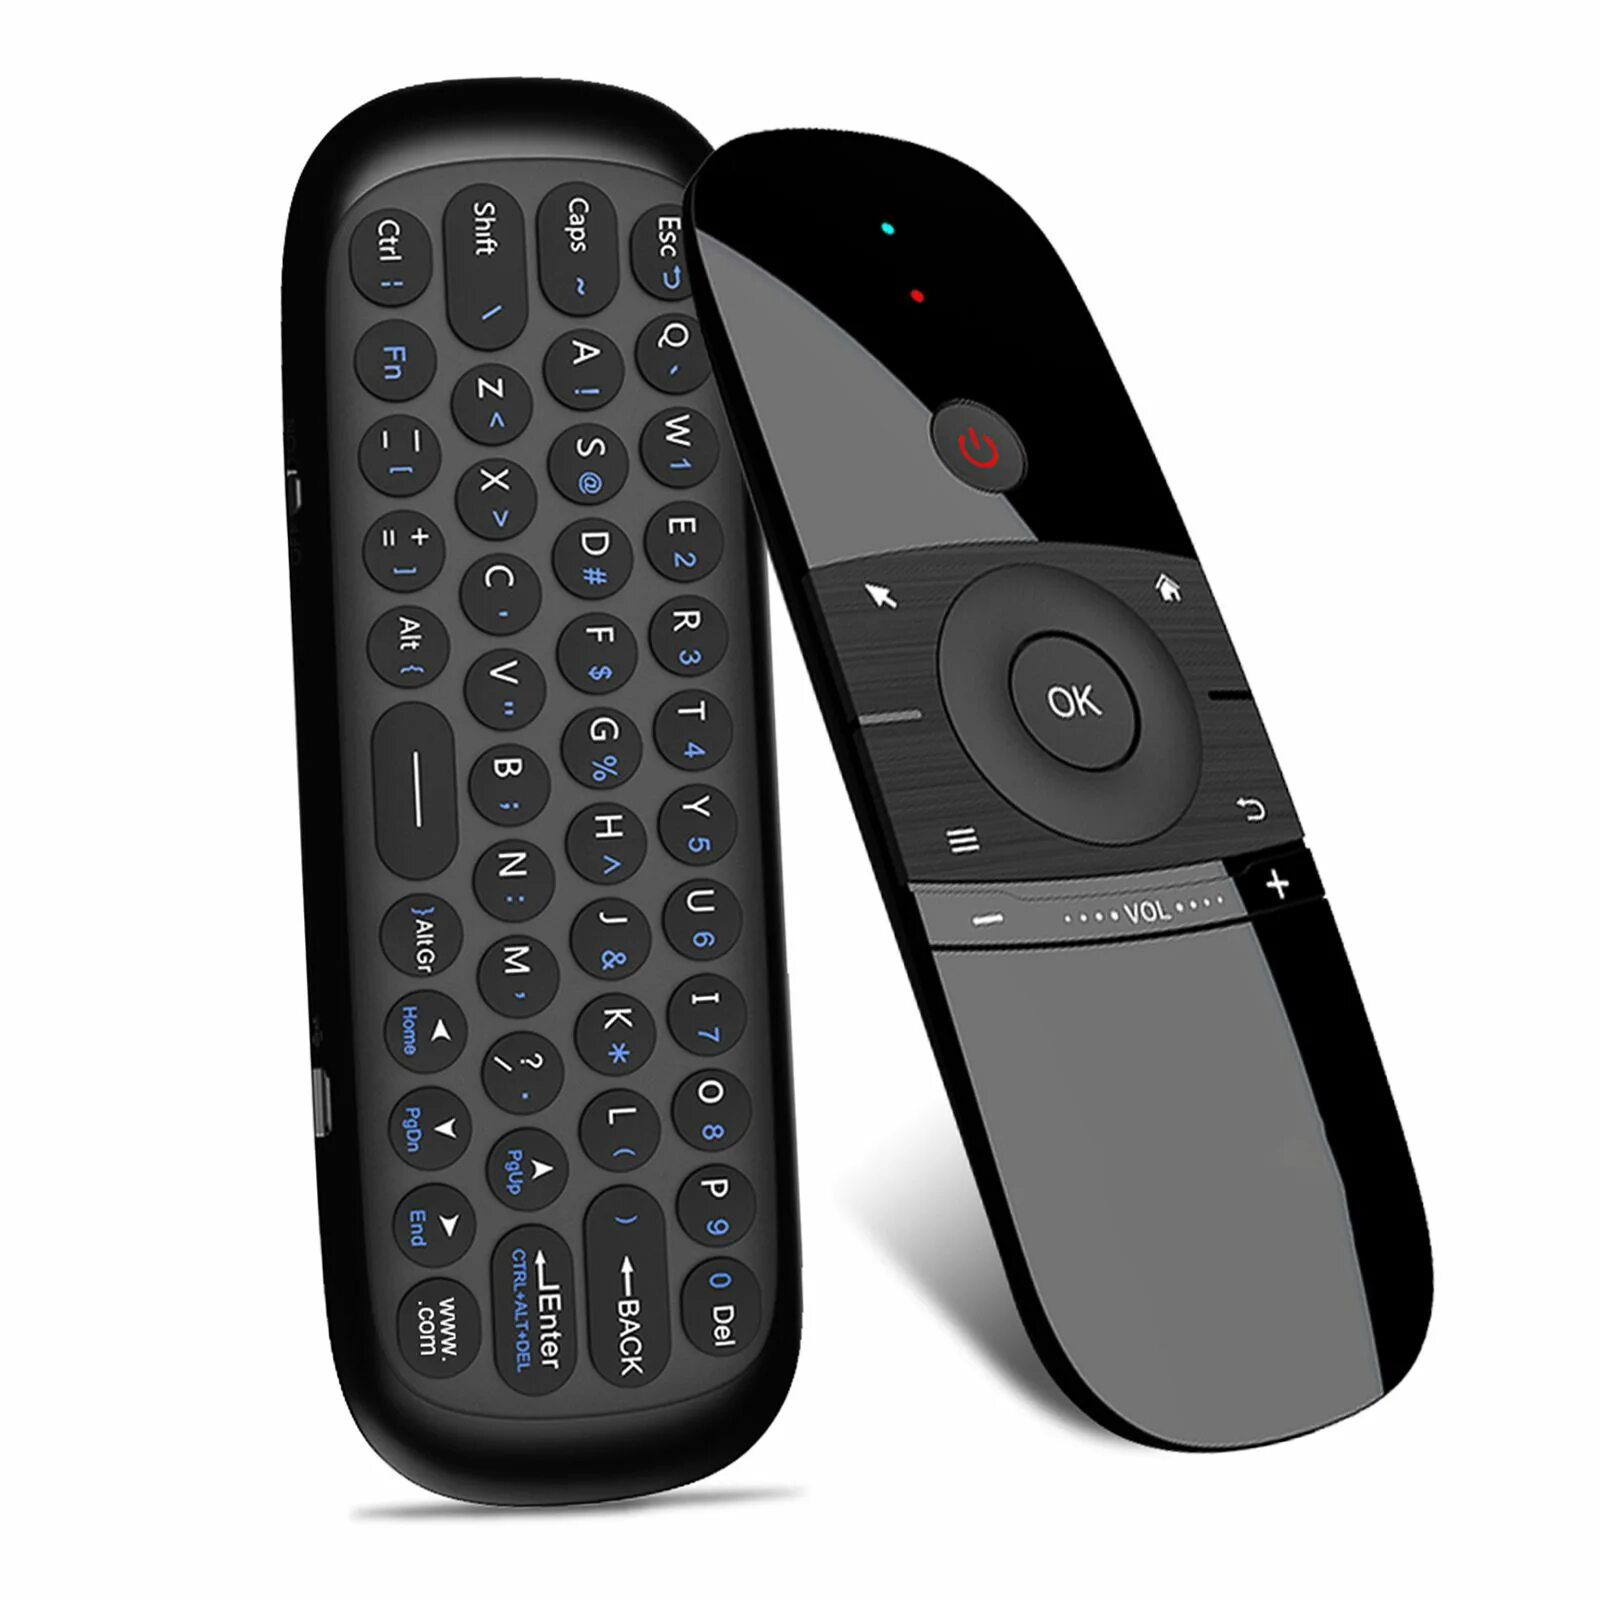 Телевизор пульт мышь. Пульт w1 Air Mouse. W1 2.4g Wireless Keyboard Air Mouse Smart Remote Control for Android TV Box PC. Air Mouse аэромышь w1. Пульт аэромышь для смарт ТВ.